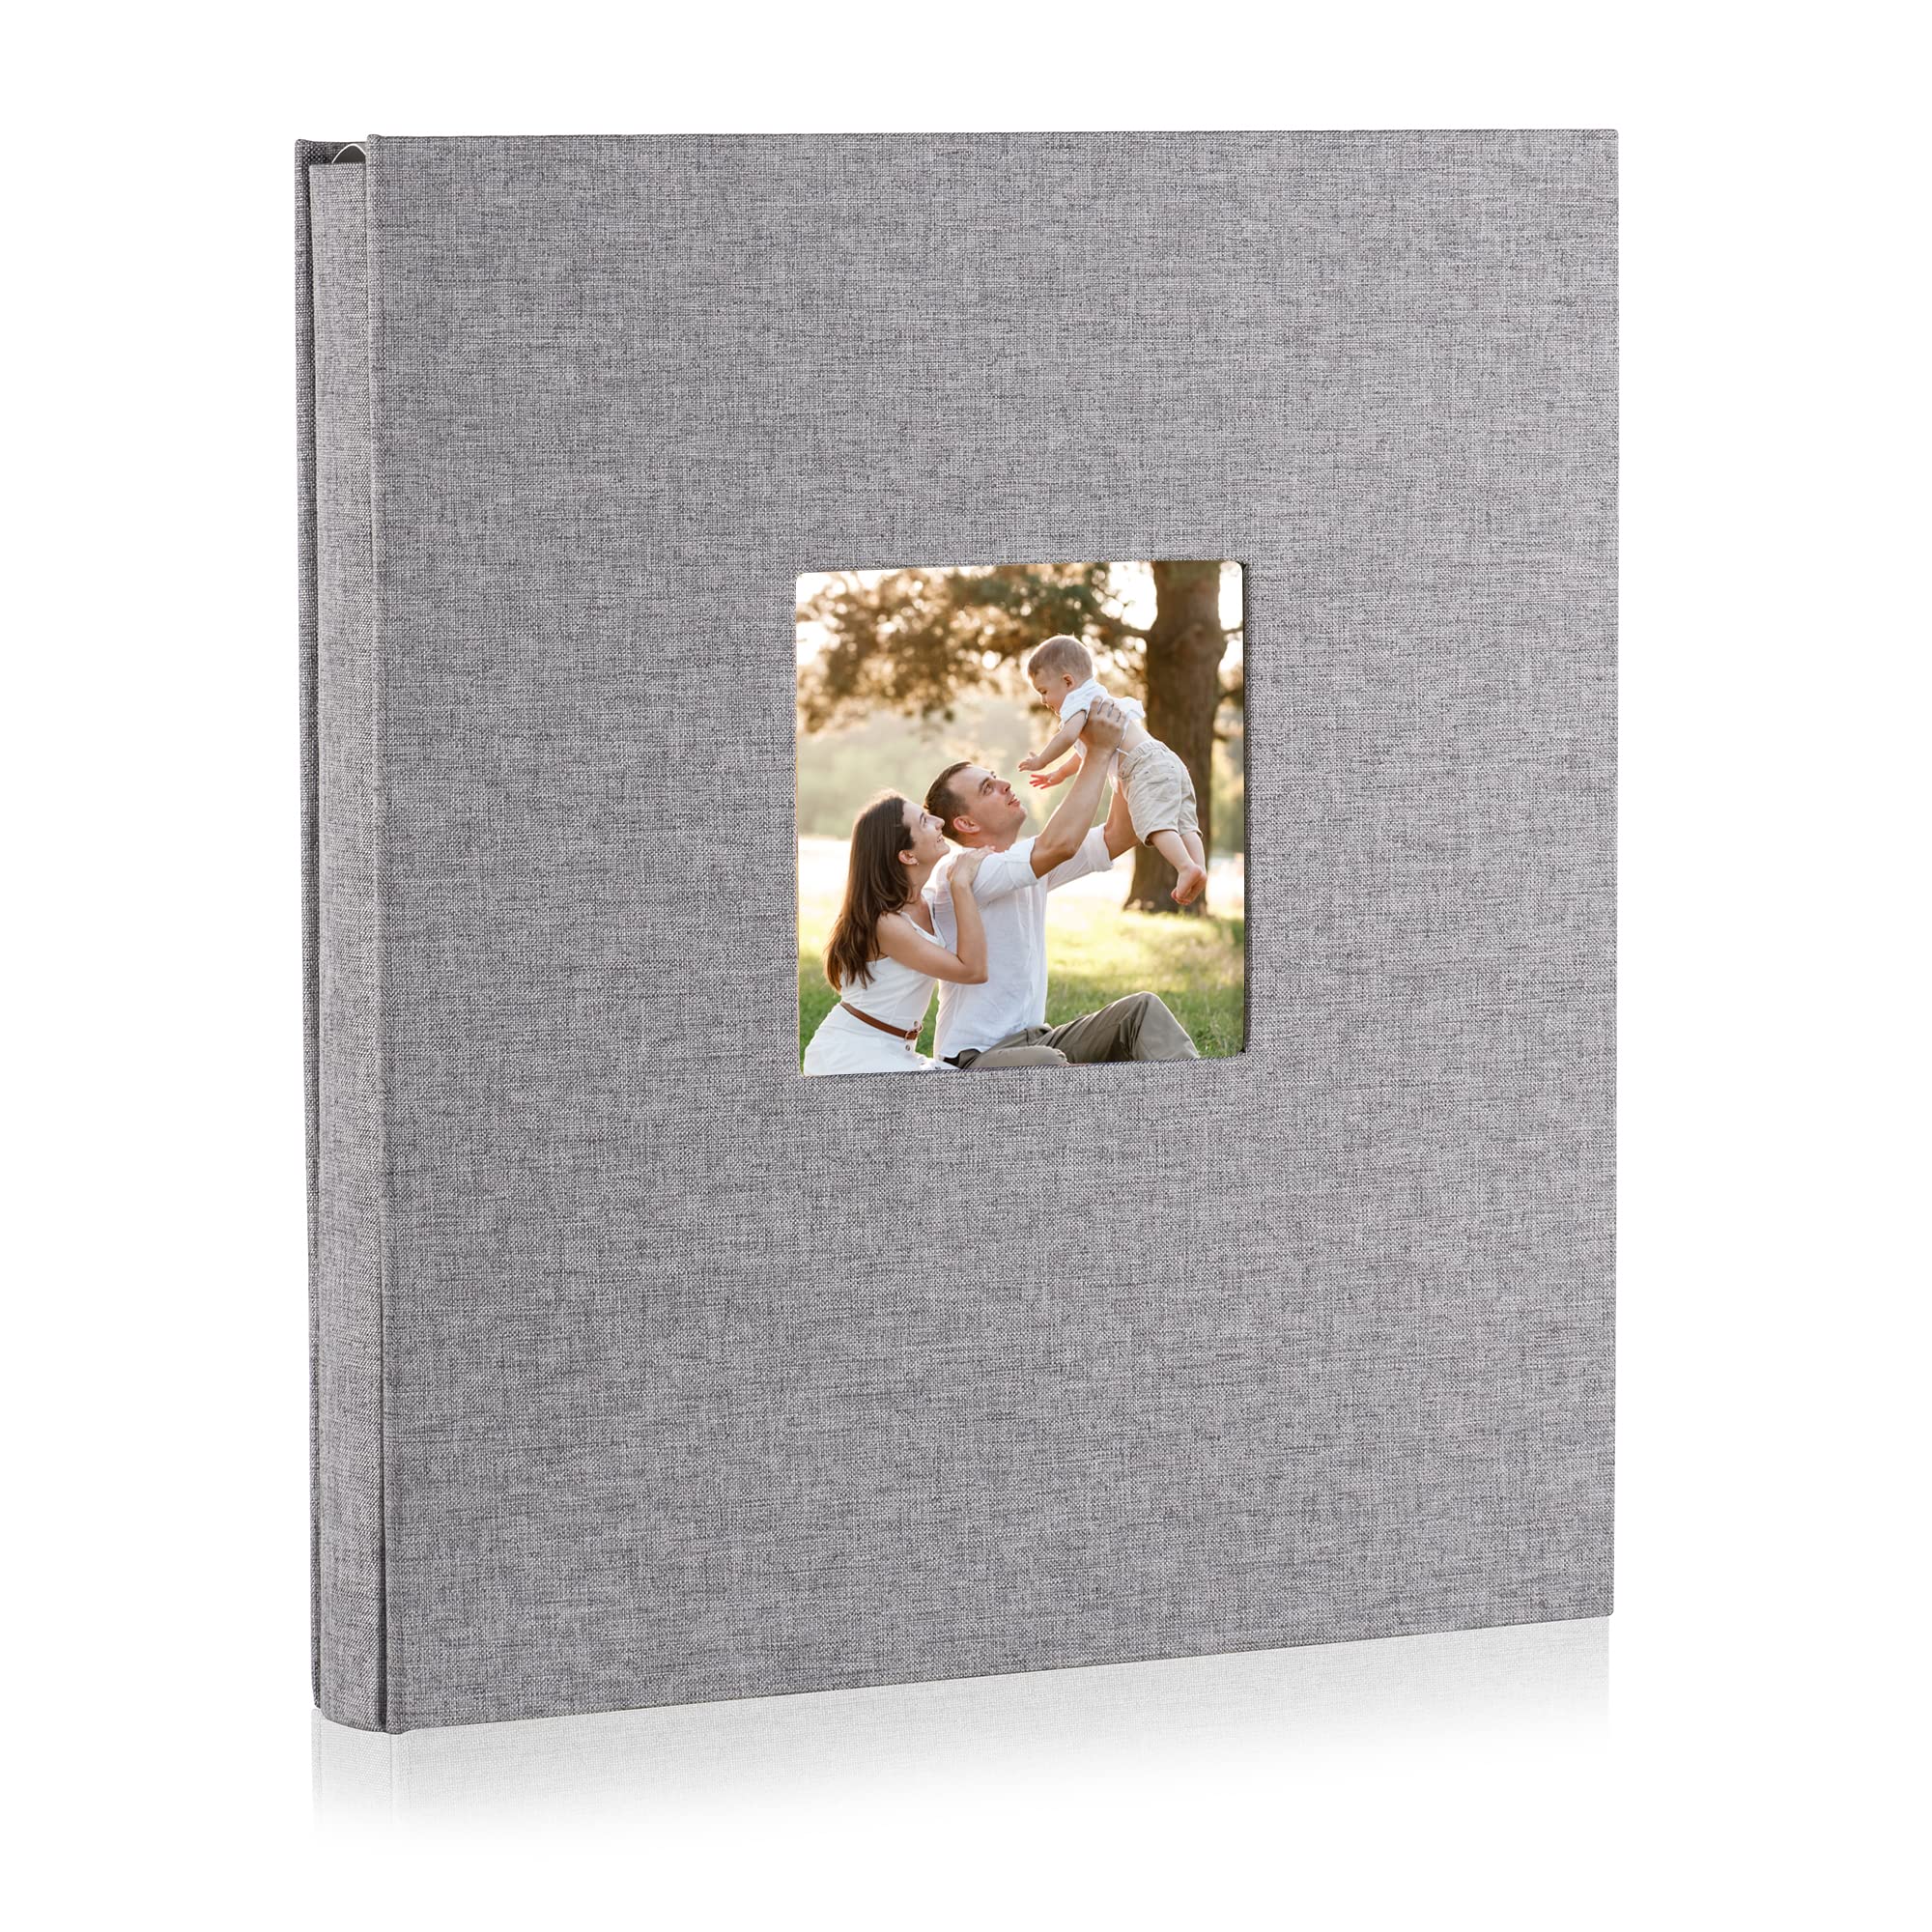 FondReco Baby Photo Album 4x6 600 Photos, 4x6 Photo Albums, Fabric Cover  Photo Albums 4x6, Large Capacity Picture Albums, Family Photo Album, Large